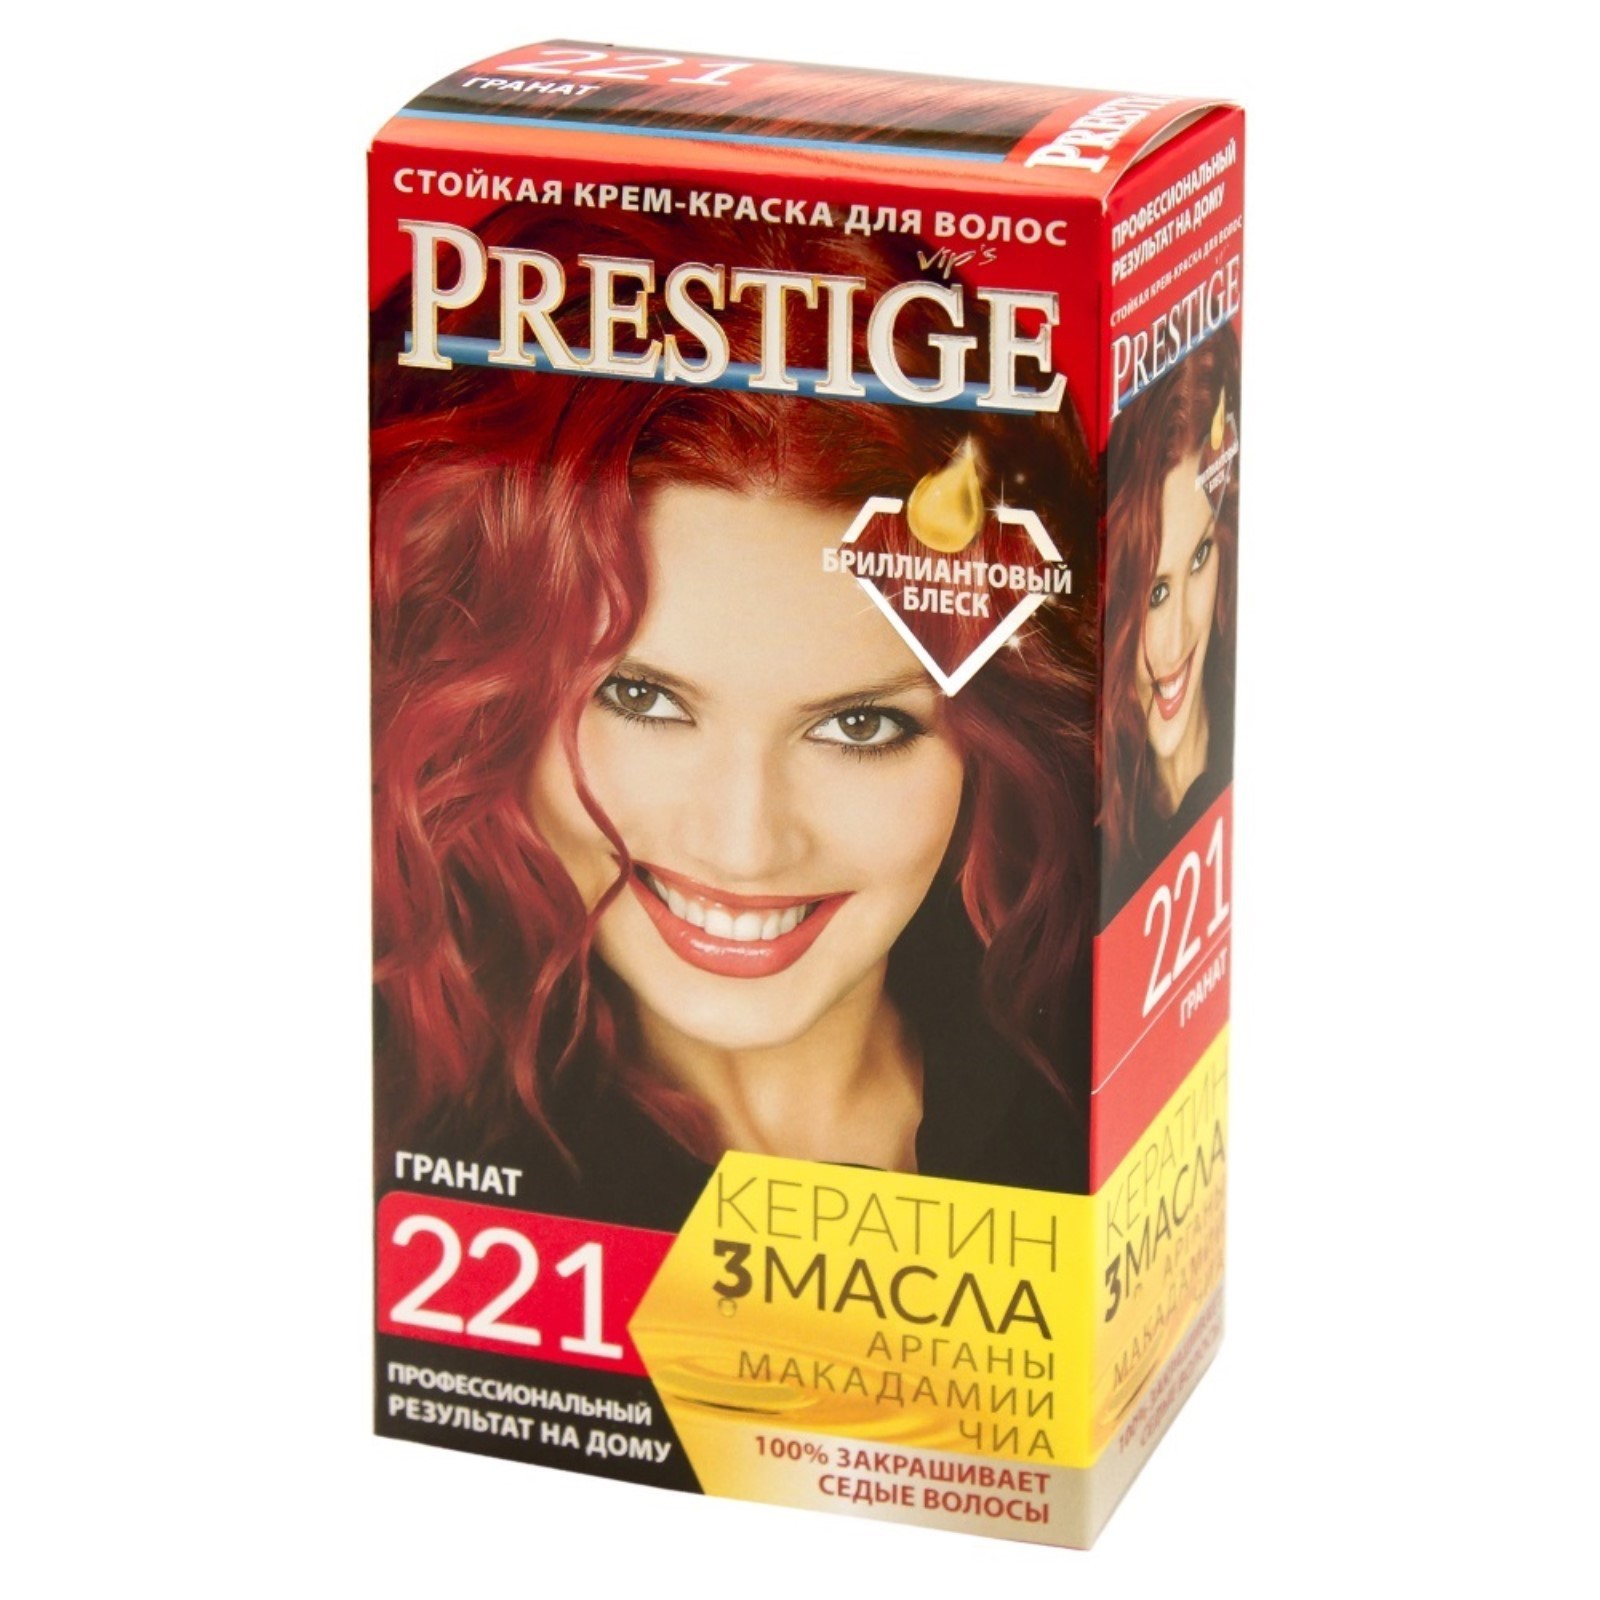 Краска для волос Престиж-221 красный гранат 3 упаковки краска престиж ма 15 масляная универсальная глянцевая серая 0 9 кг